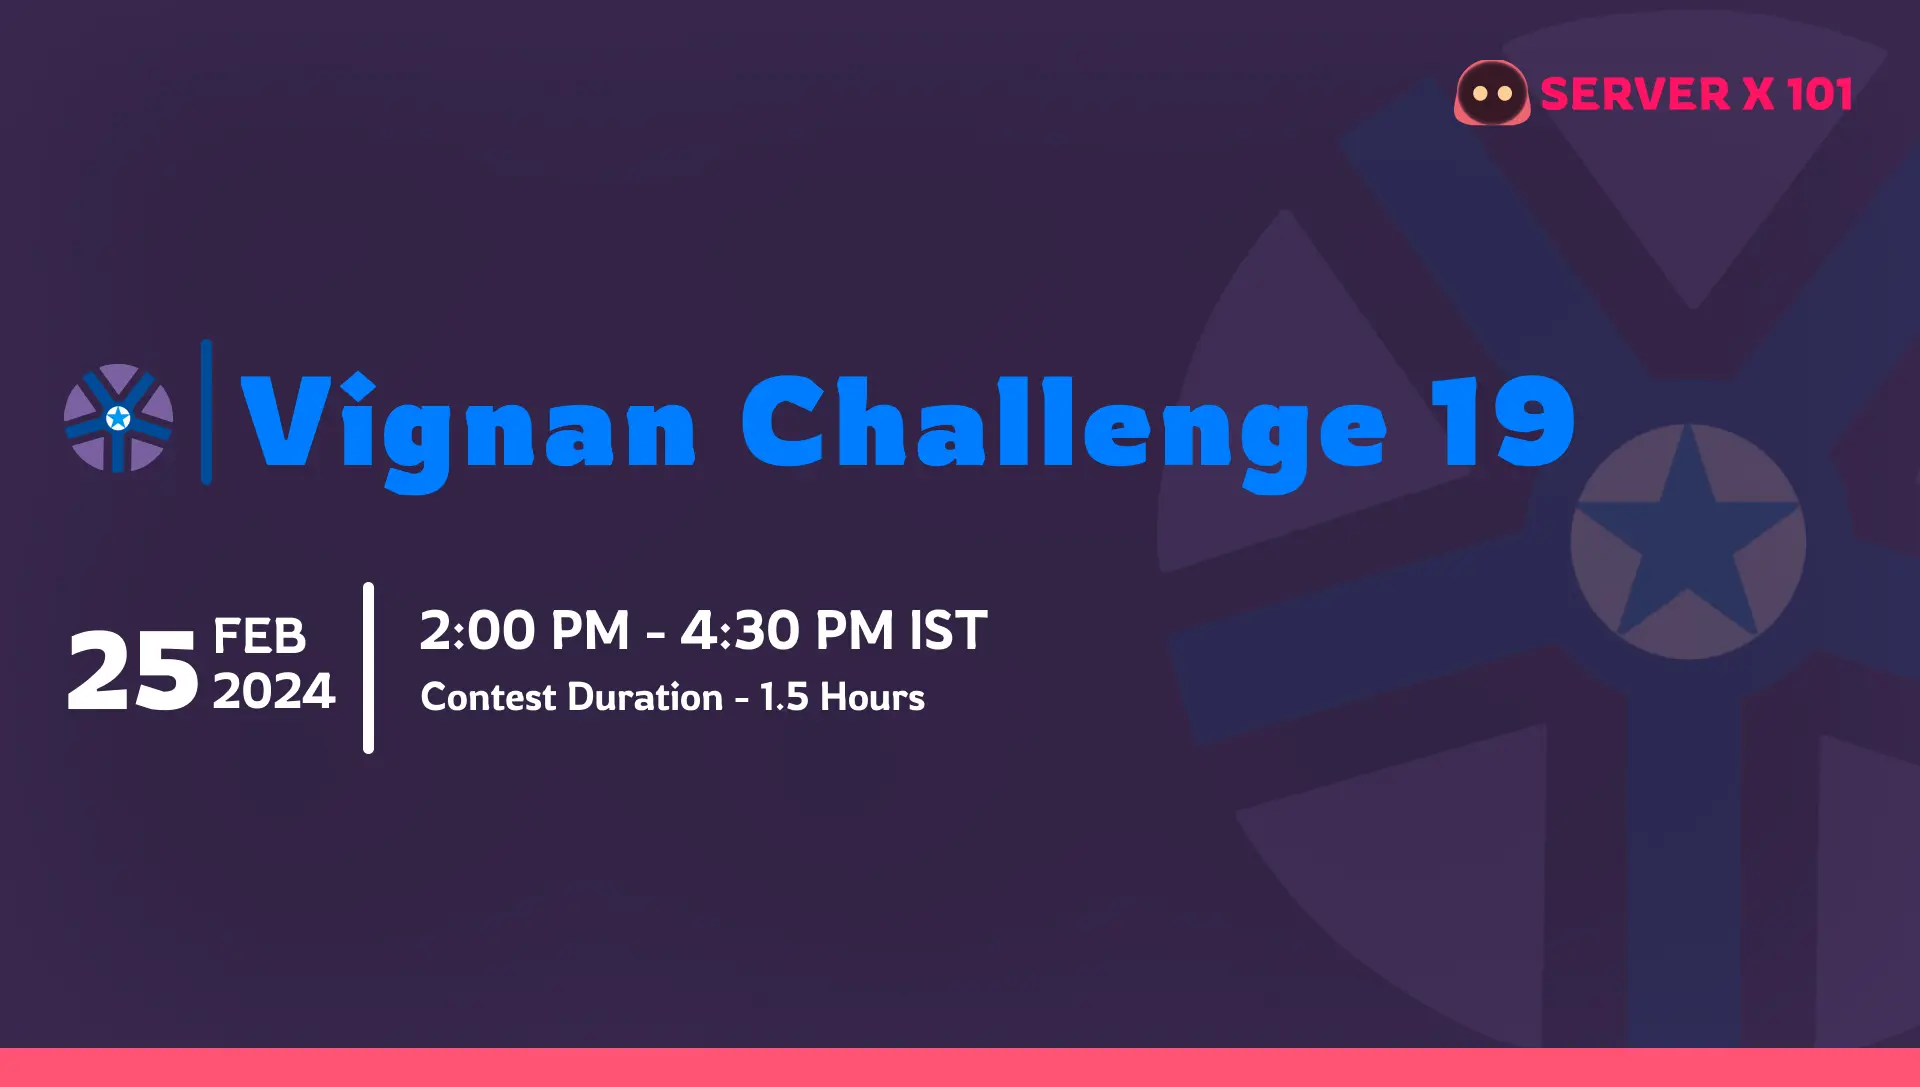 Vignan's Challenge 19